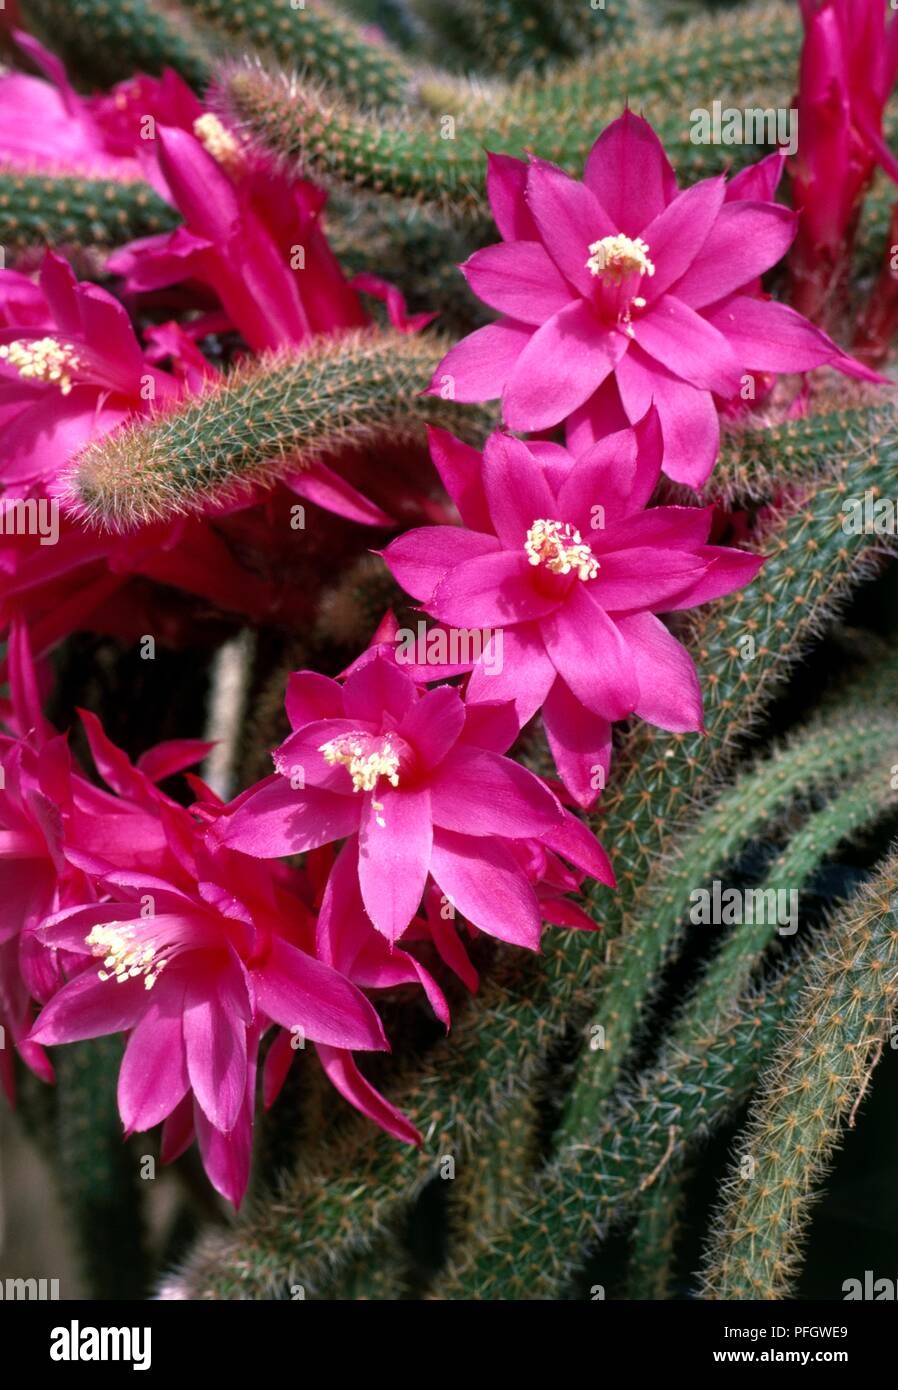 Aporocactus flagelliformis (Rat's tail cactus) with bright pink flowers, close-up Stock Photo